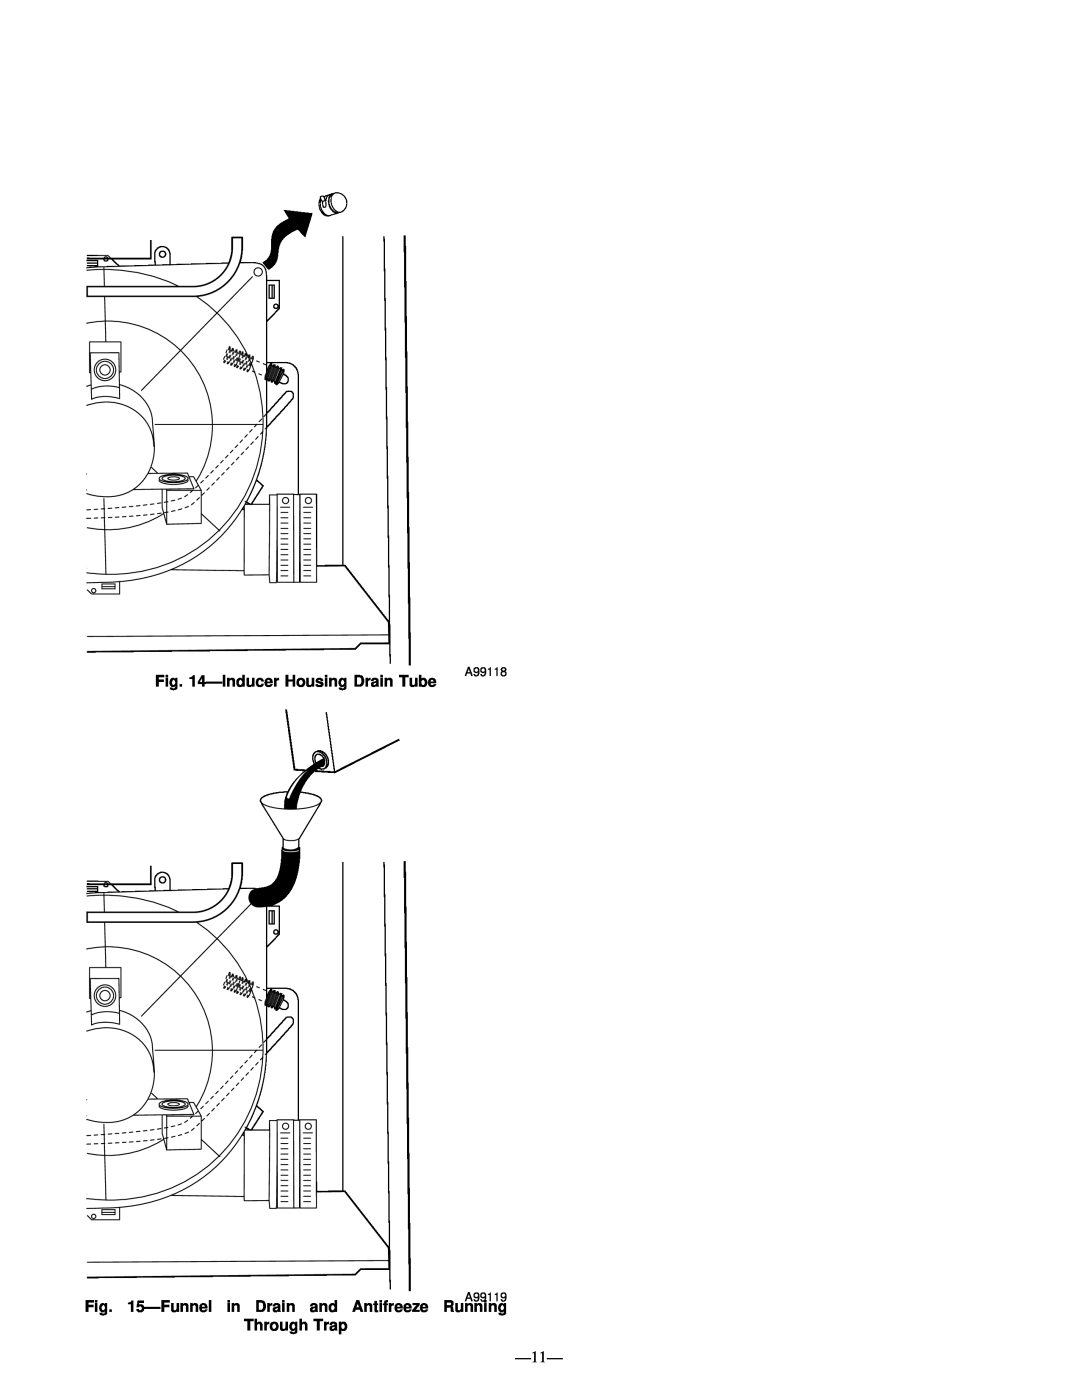 Bryant 350MAV user manual InducerHousing Drain Tube, Funnelin Drain and Antifreeze Running, Through Trap, A99118, A99119 